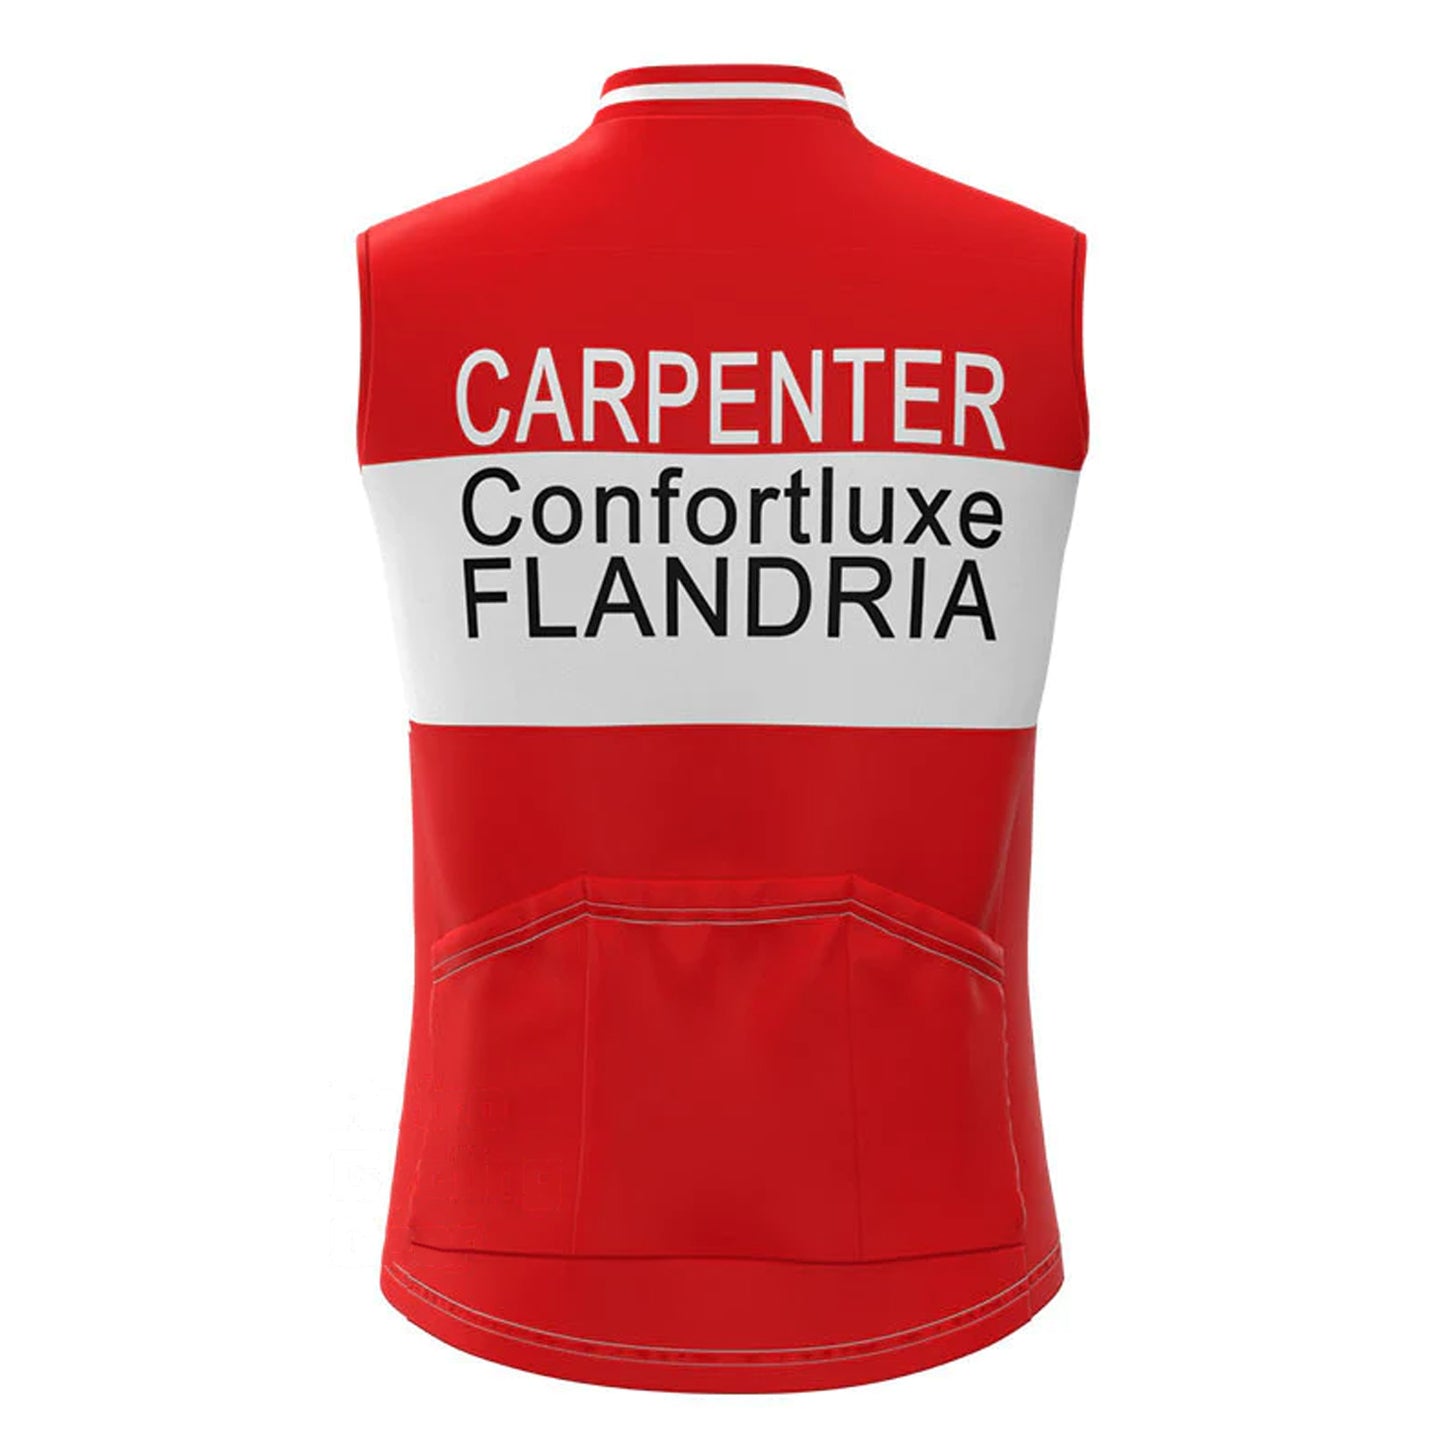 Carpenter Confortluxe Flandria Red Retro MTB Cycling Vest